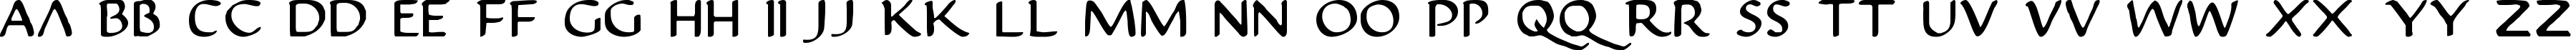 Пример написания английского алфавита шрифтом Justinian